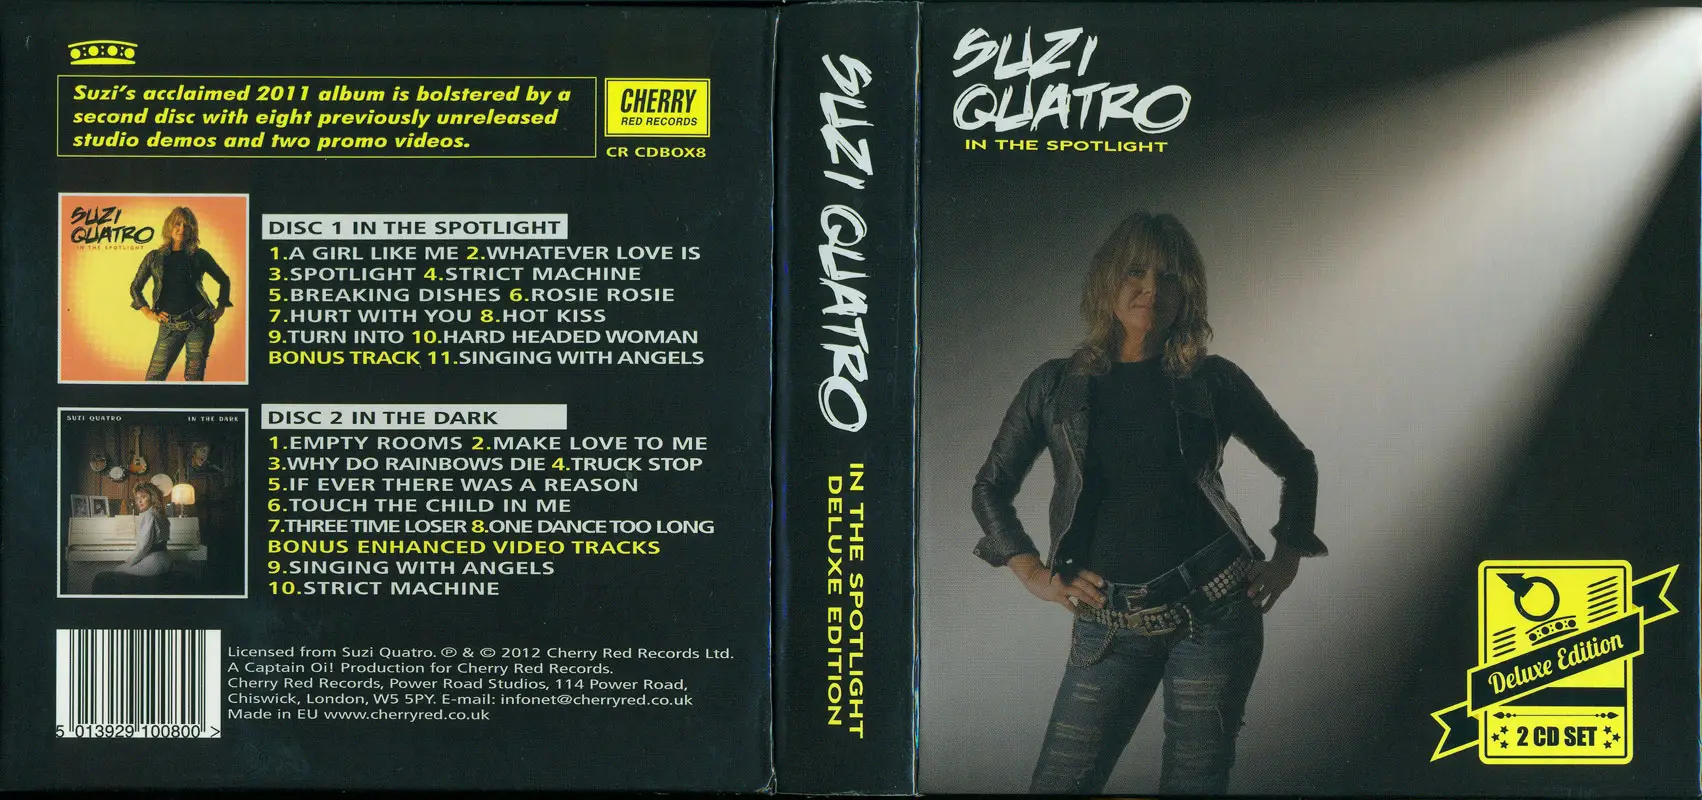 Включи кватро. In the Spotlight Сьюзи кватро. Suzi quatro 1995 диск обложка. Suzi quatro - 2011 - in the Dark. Suzi quatro in the Spotlight 2011.